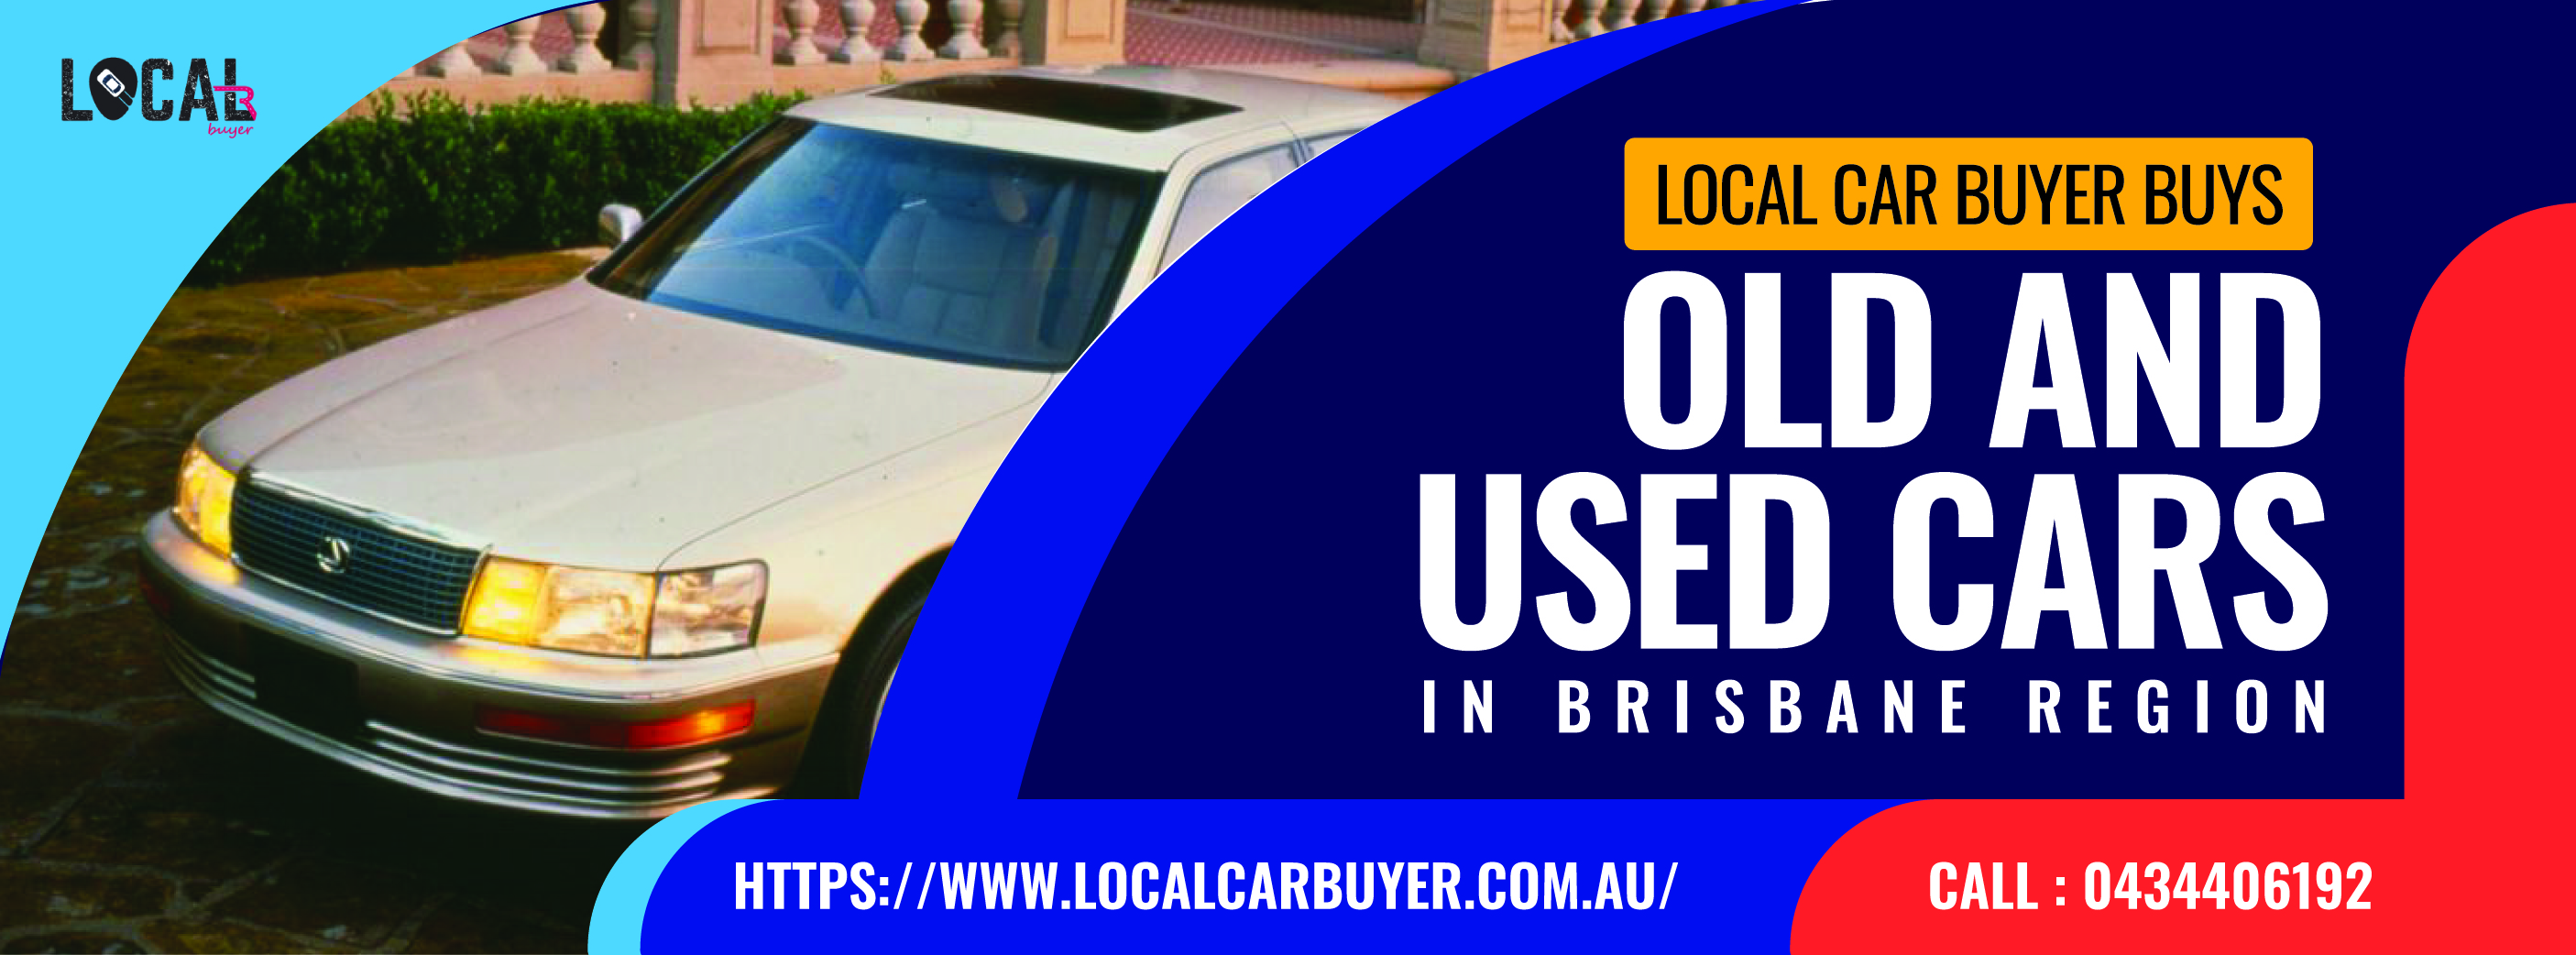 used Cars in Brisbane Region